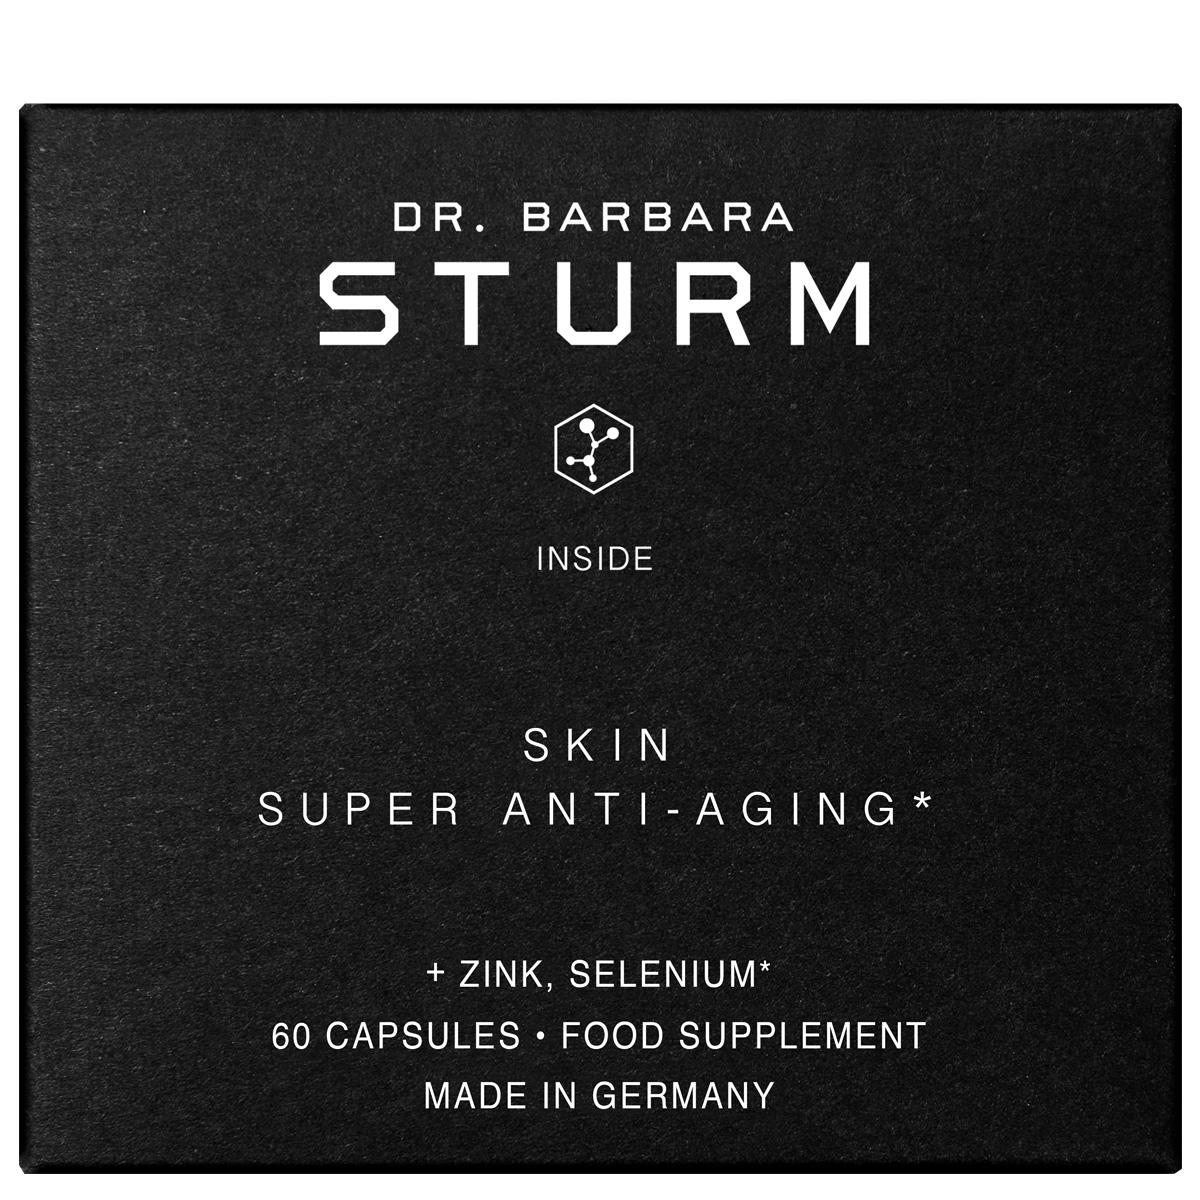 Dr. Barbara Sturm Skin Super Anti-Aging* 60 Capsules Pro Packung 60 Stück - 3